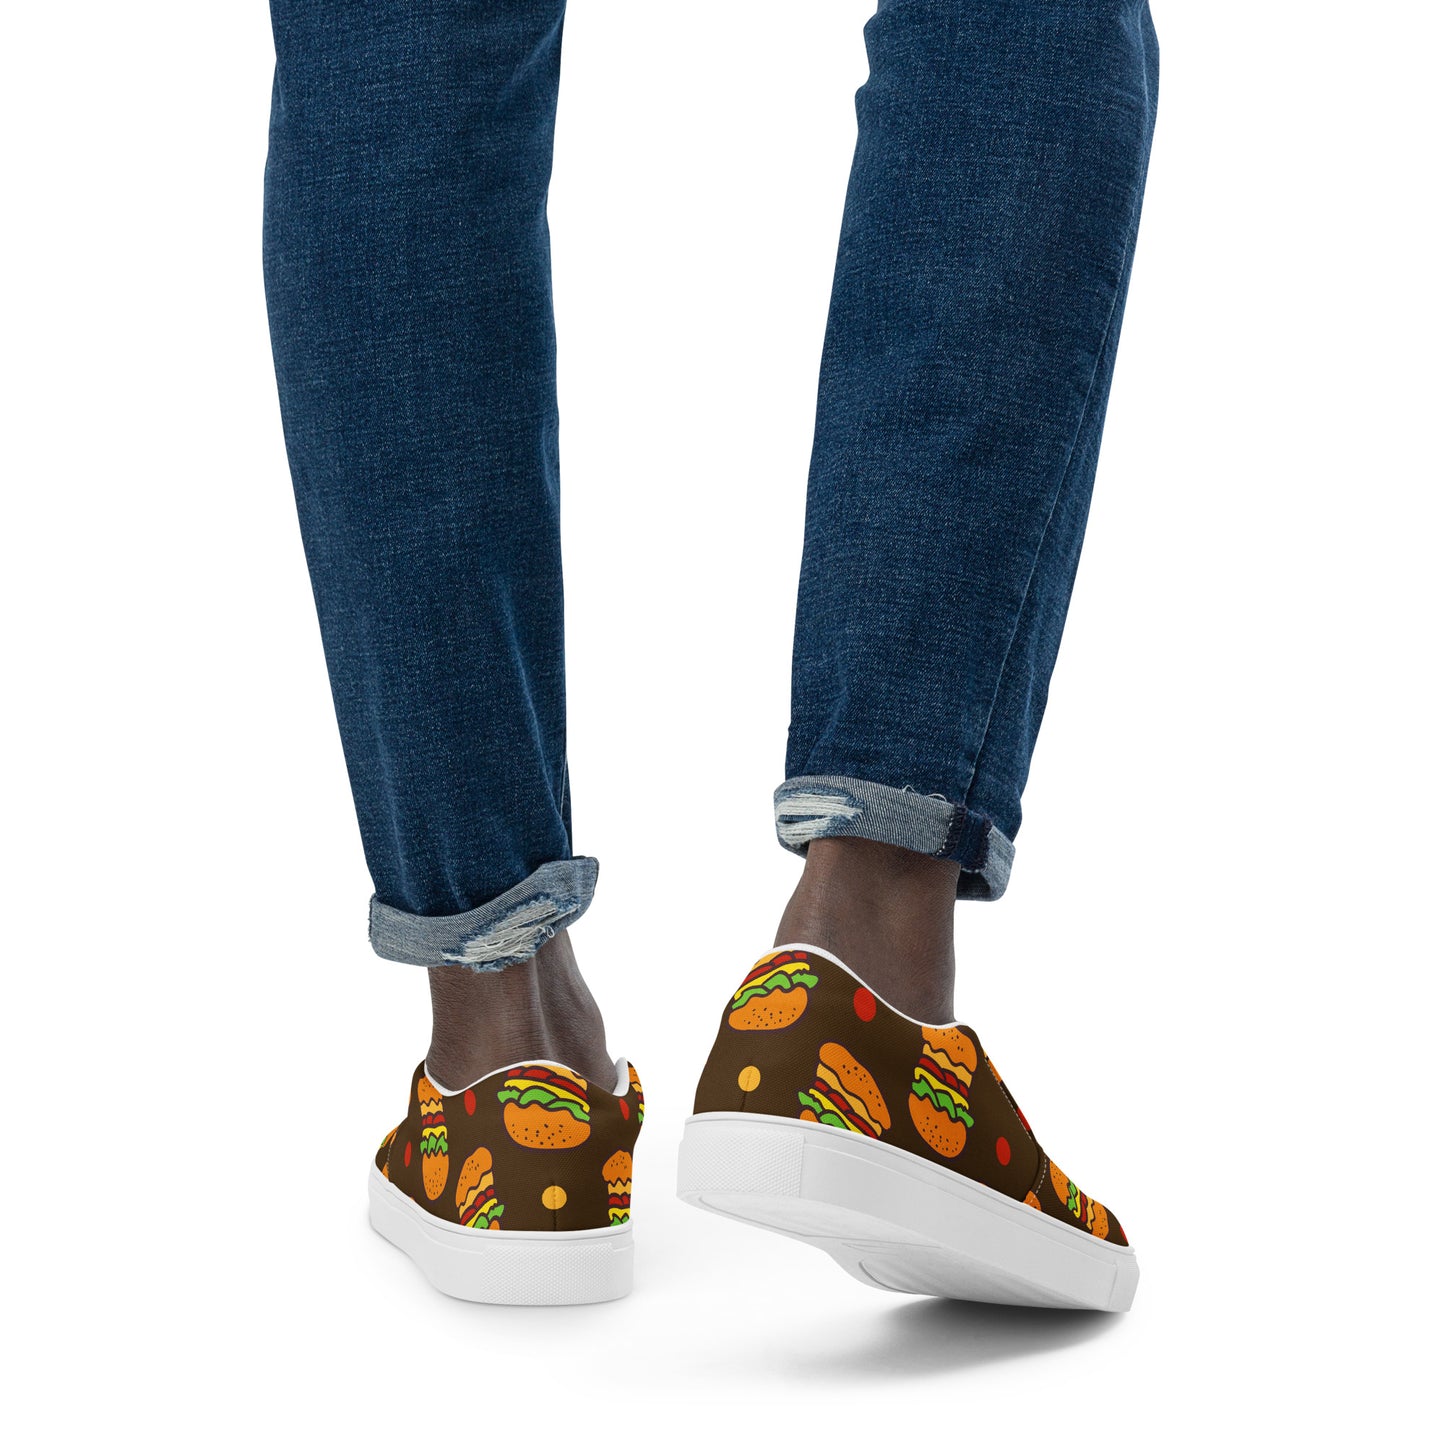 Burgers - Men’s slip-on canvas shoes Mens Slip On Shoes